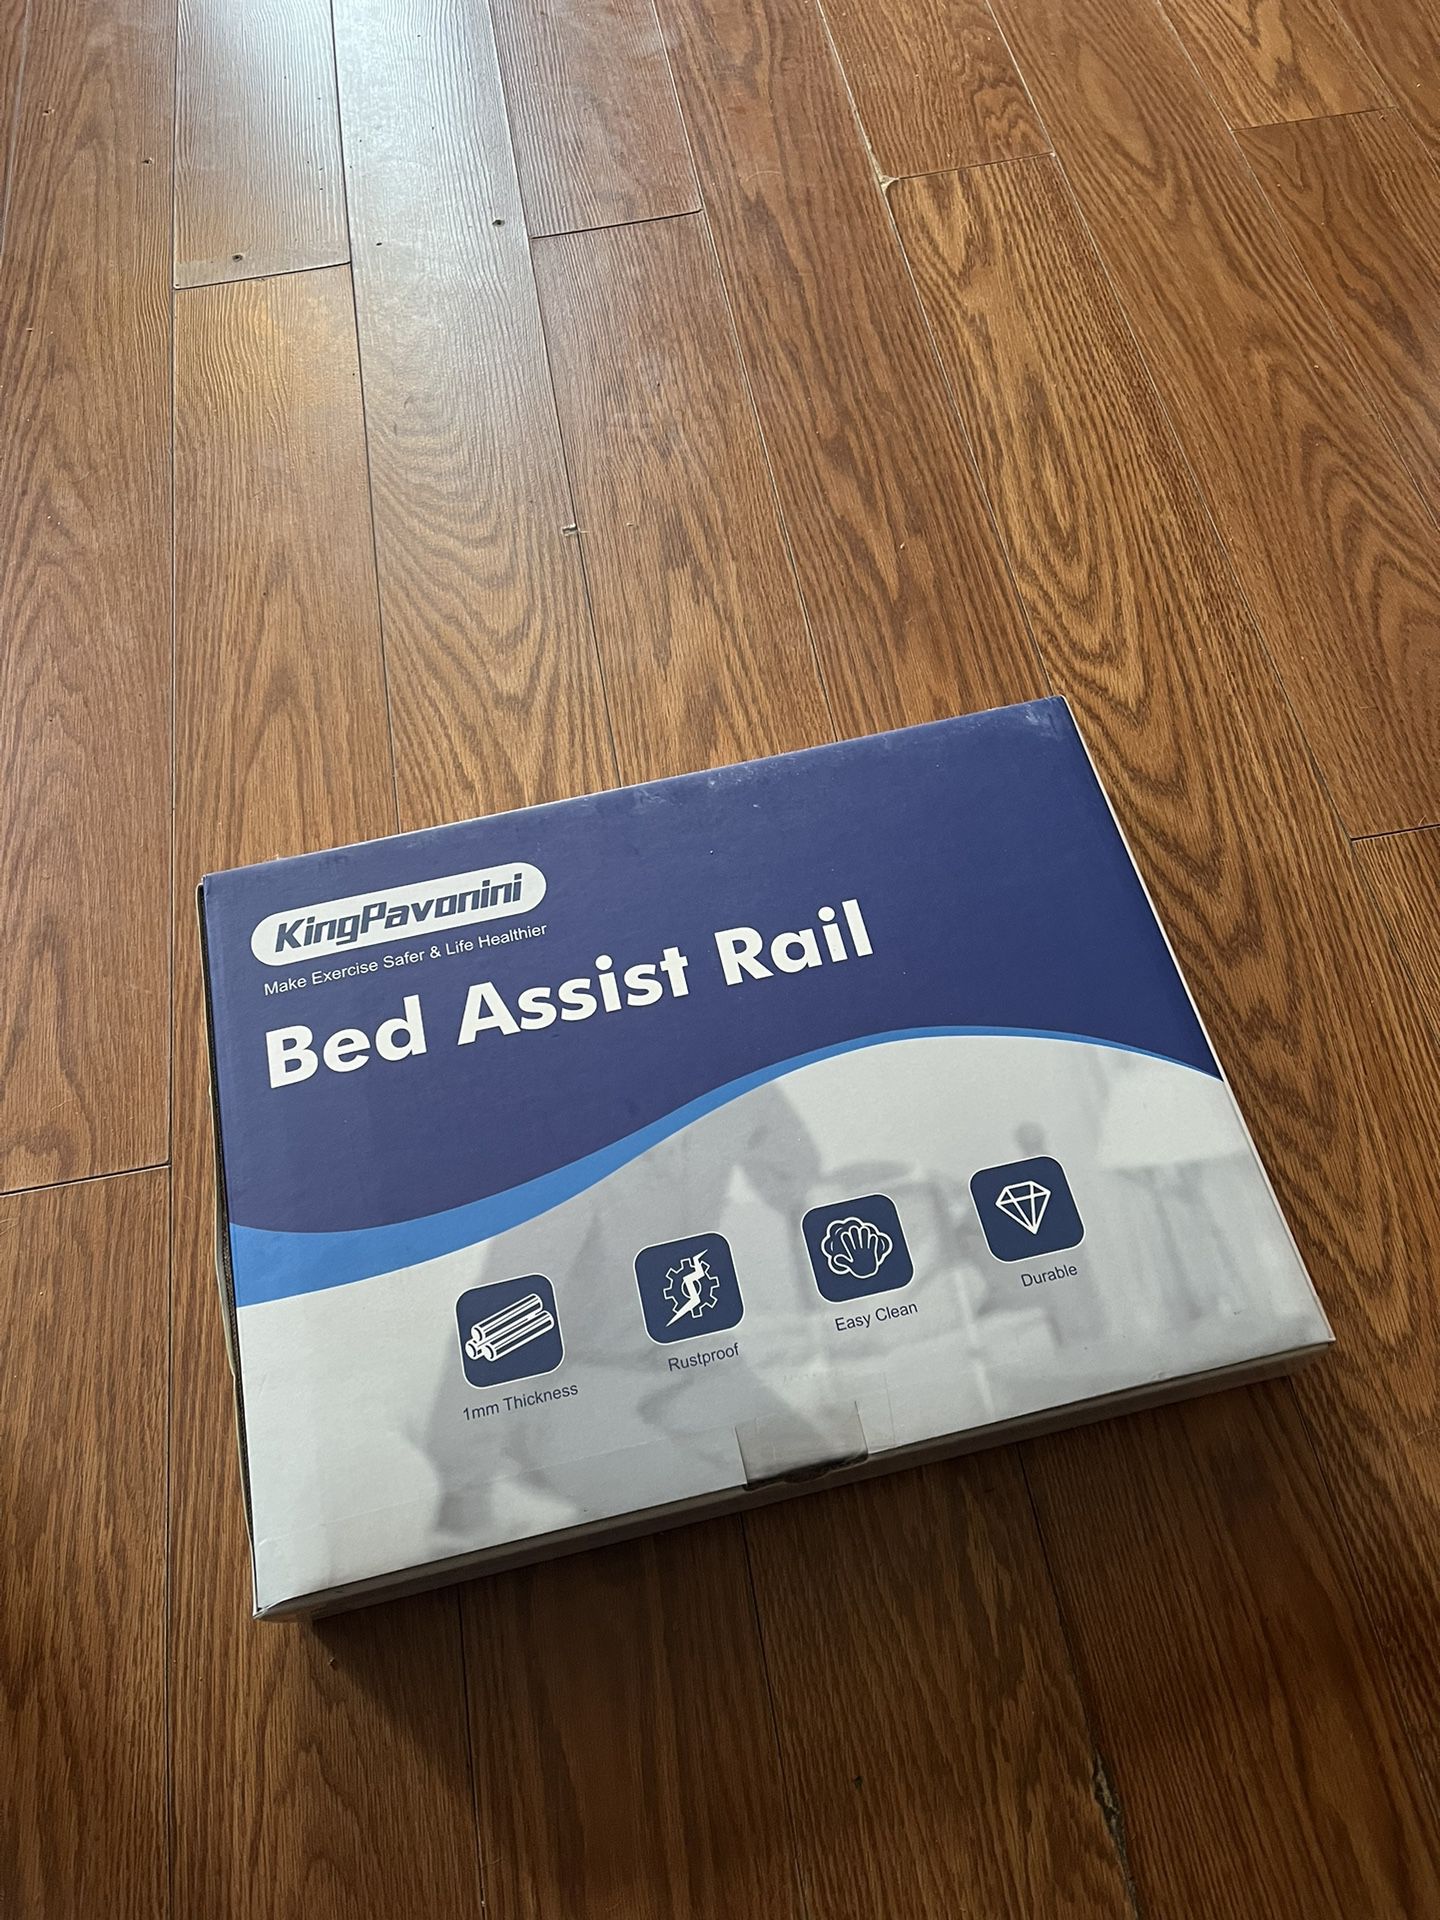 Bed Assist Rail $20